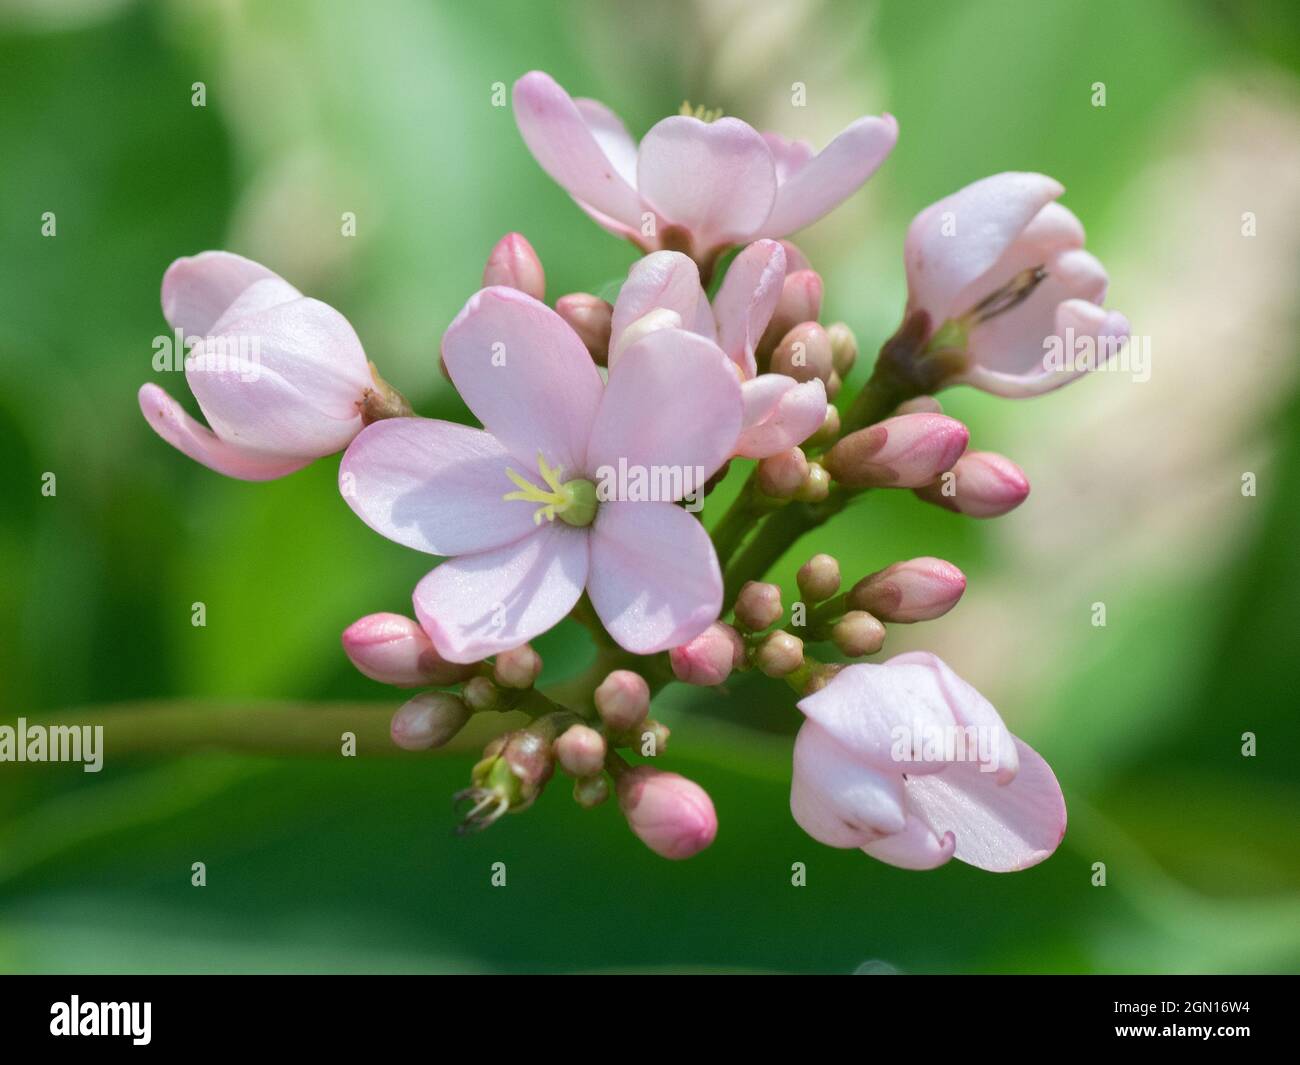 A Jatropha integerrima shrub with pale pink flowers. Stock Photo